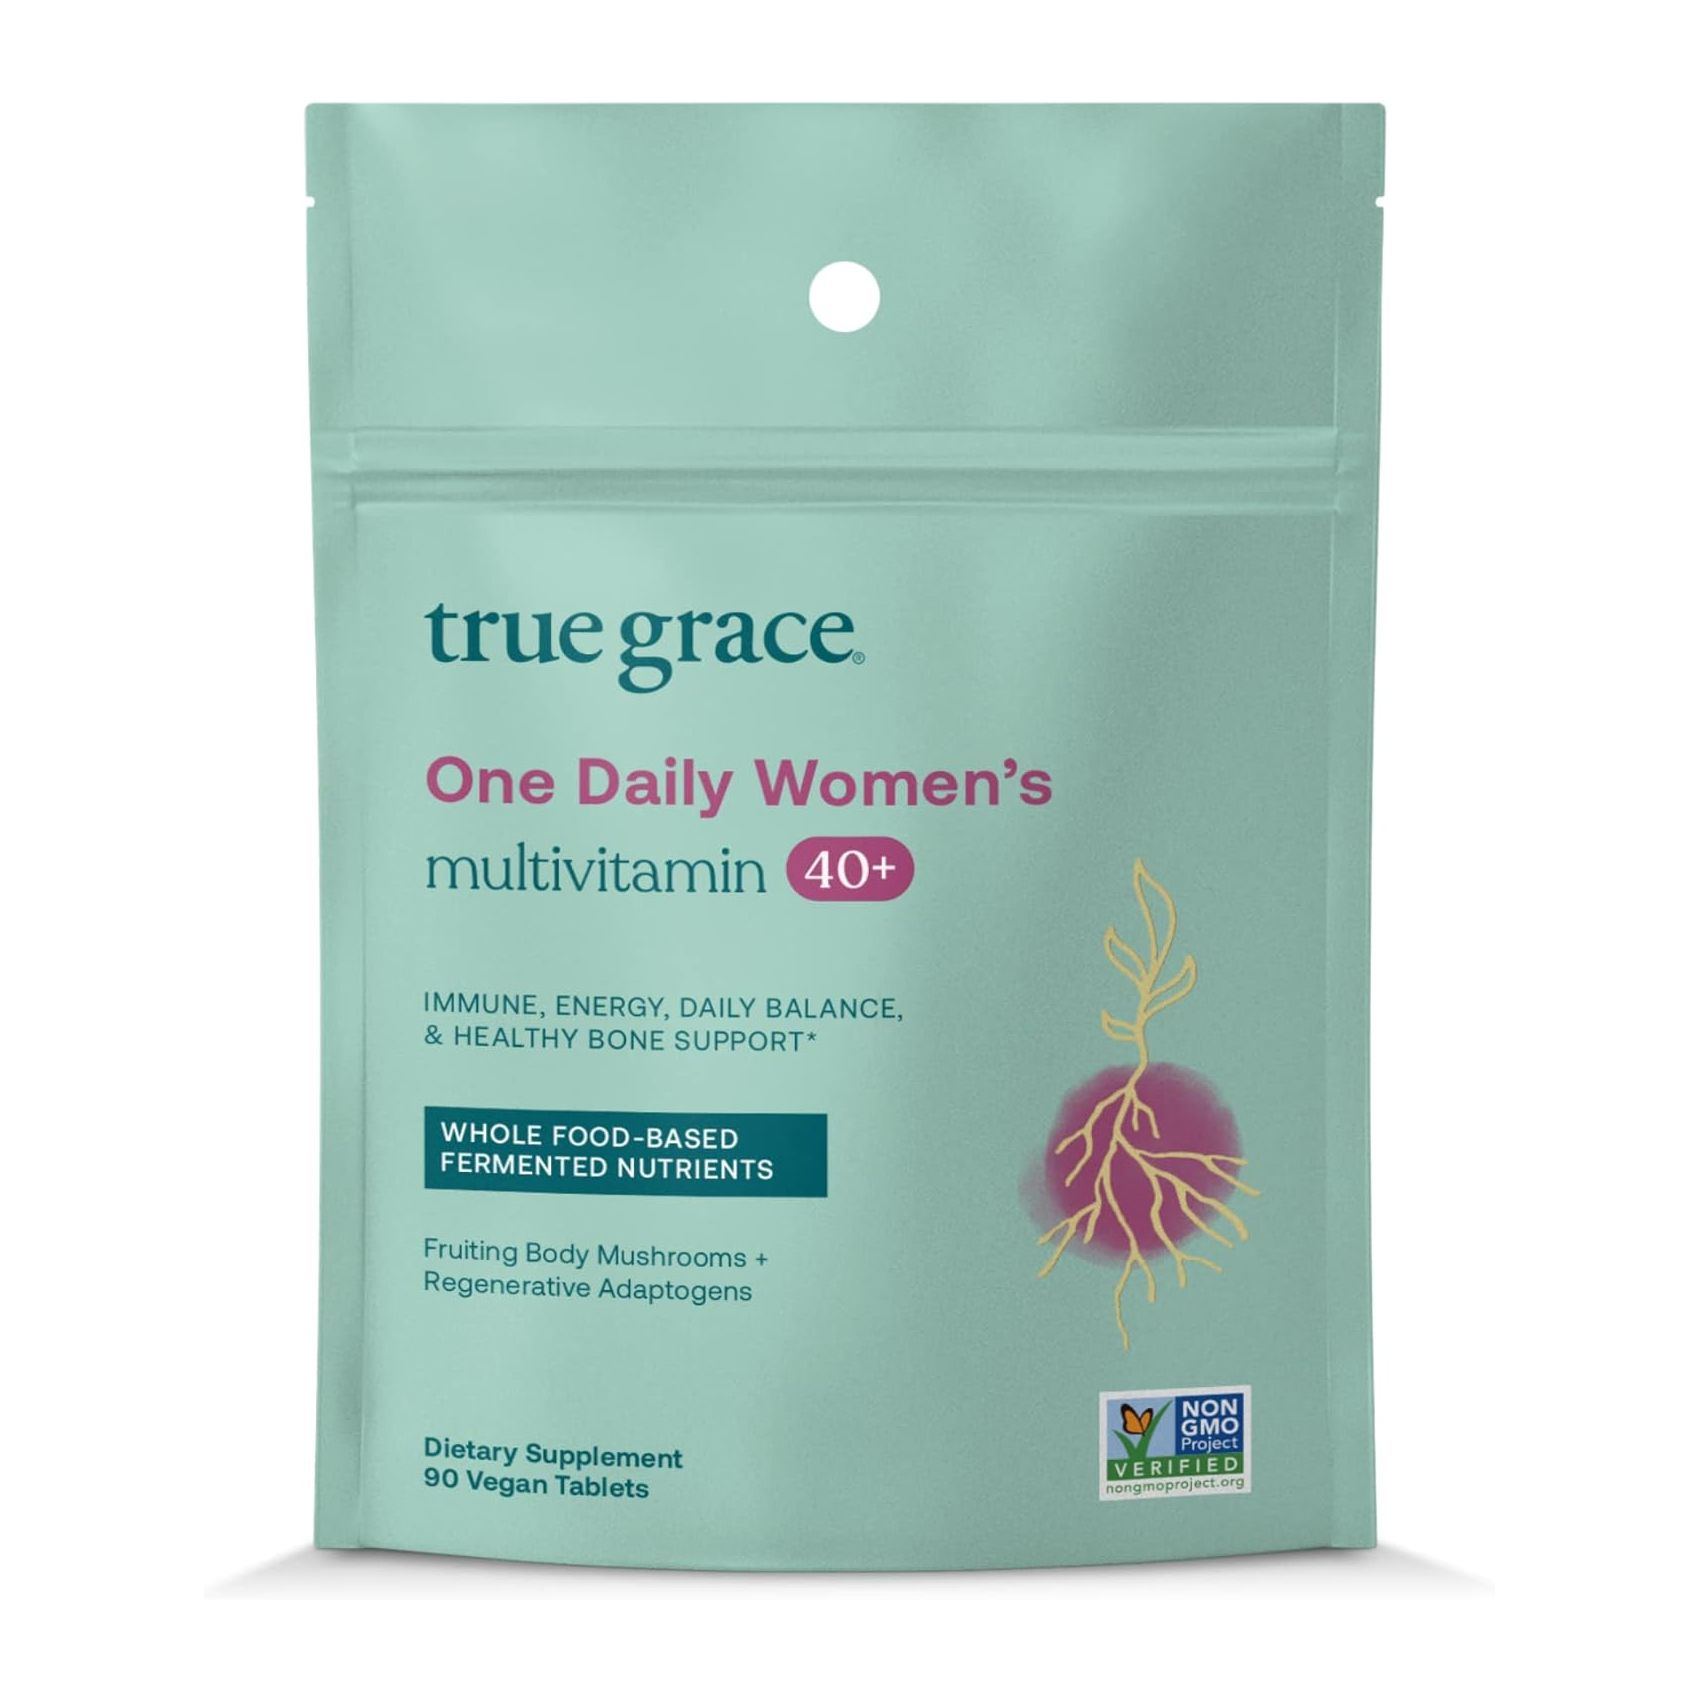 Мультивитамины True Grace One Daily Women’s 40+, 90 таблеток цена и фото